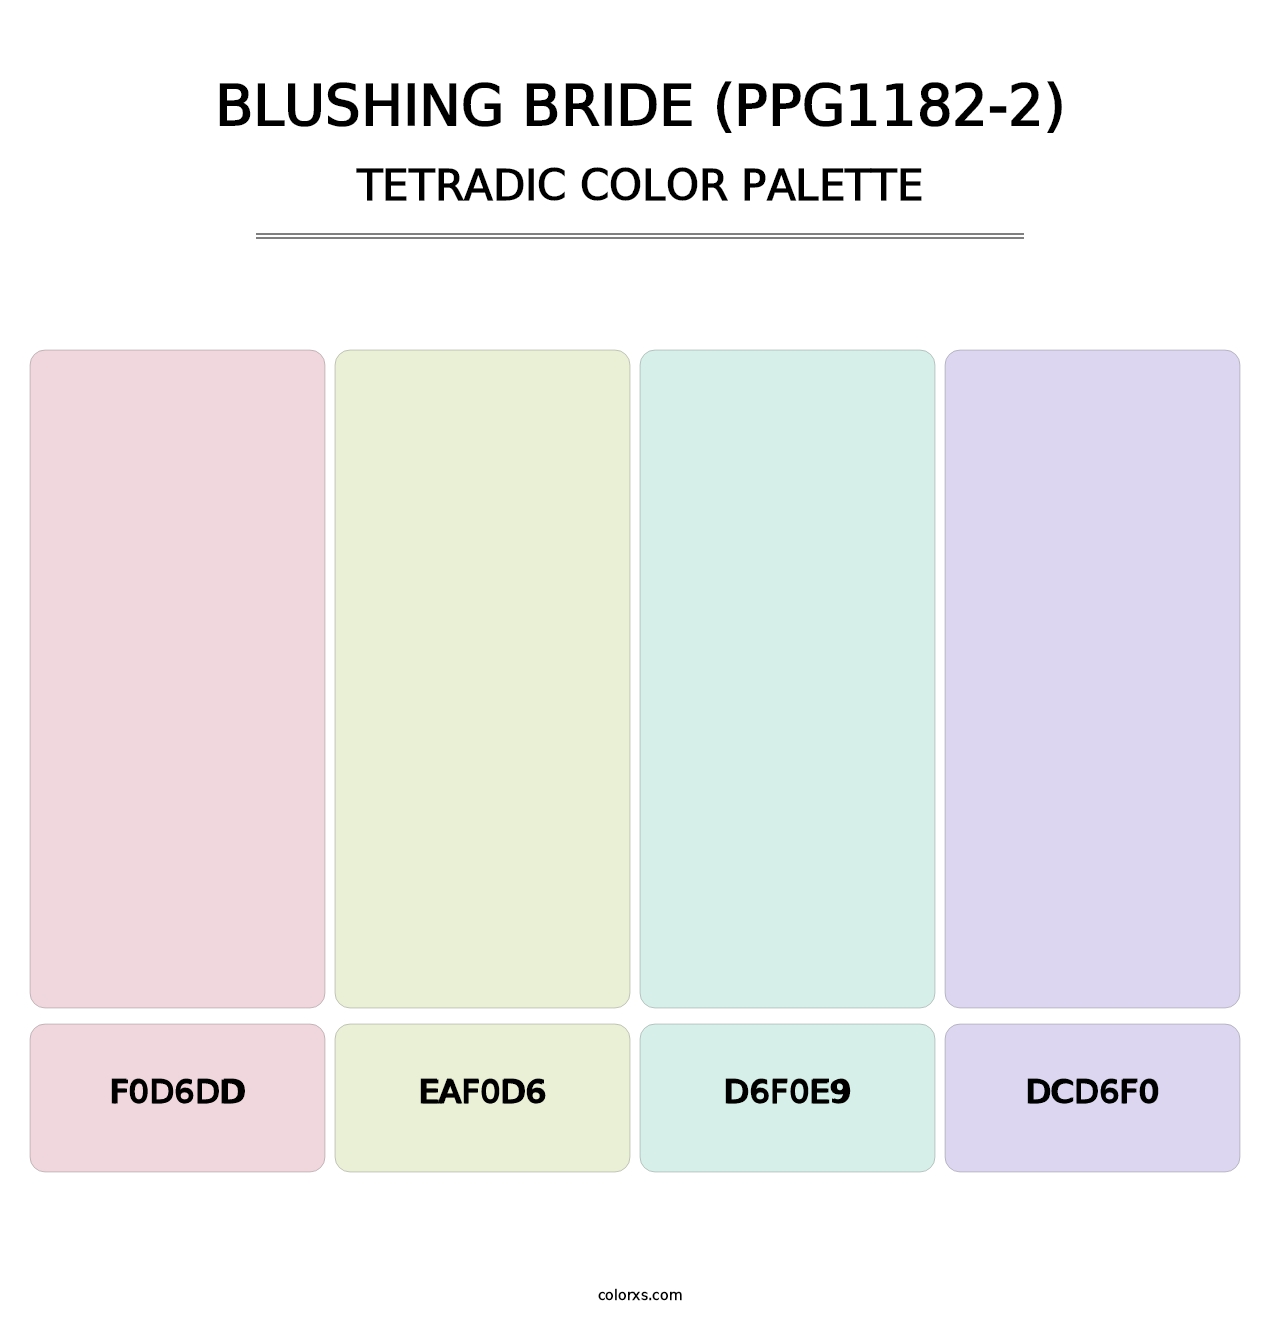 Blushing Bride (PPG1182-2) - Tetradic Color Palette